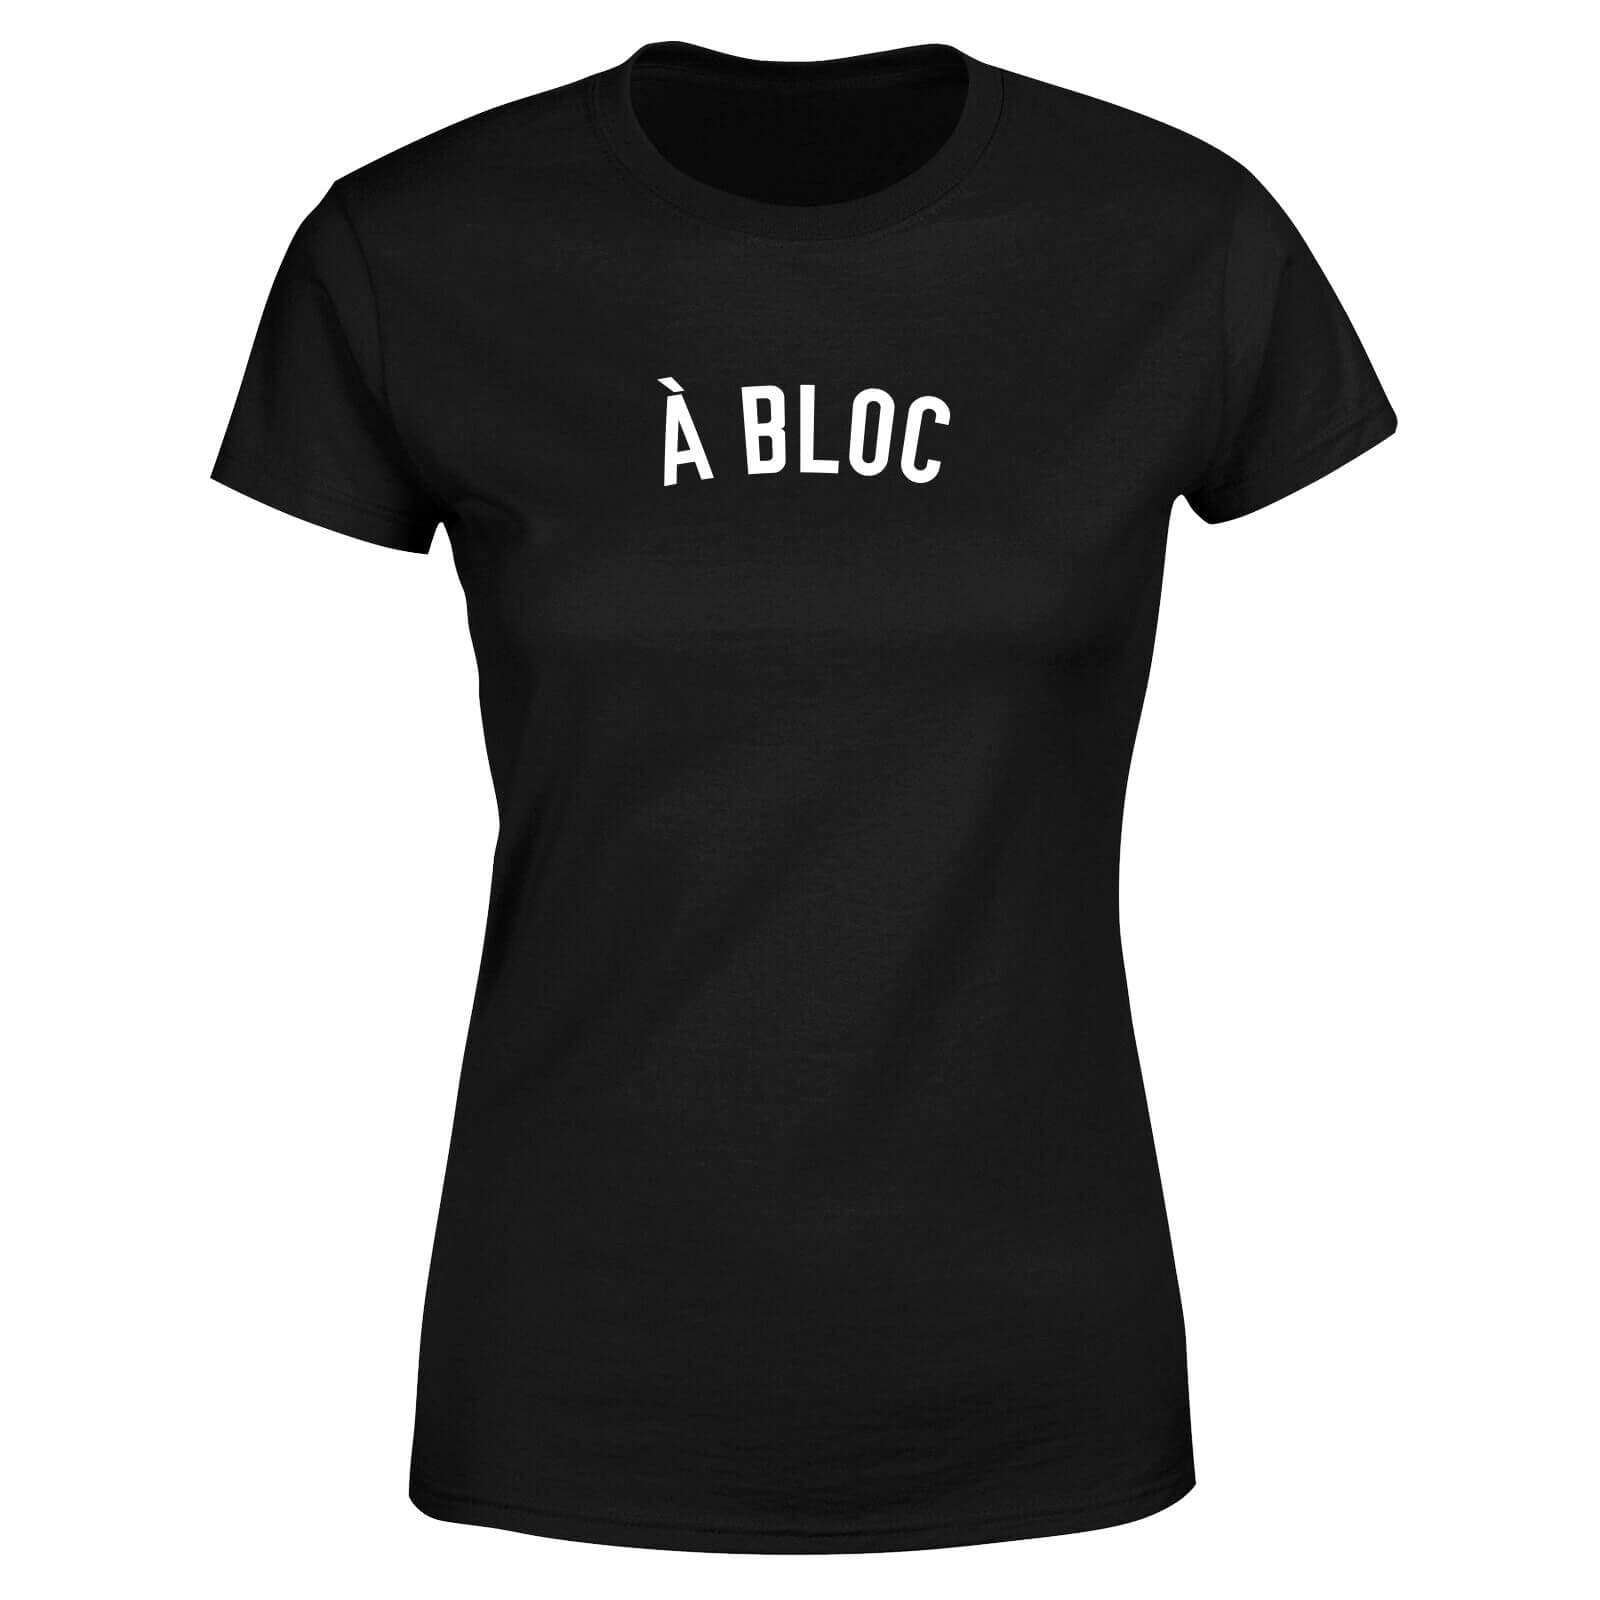 A Bloc Women's T-Shirt - Black - M - Black